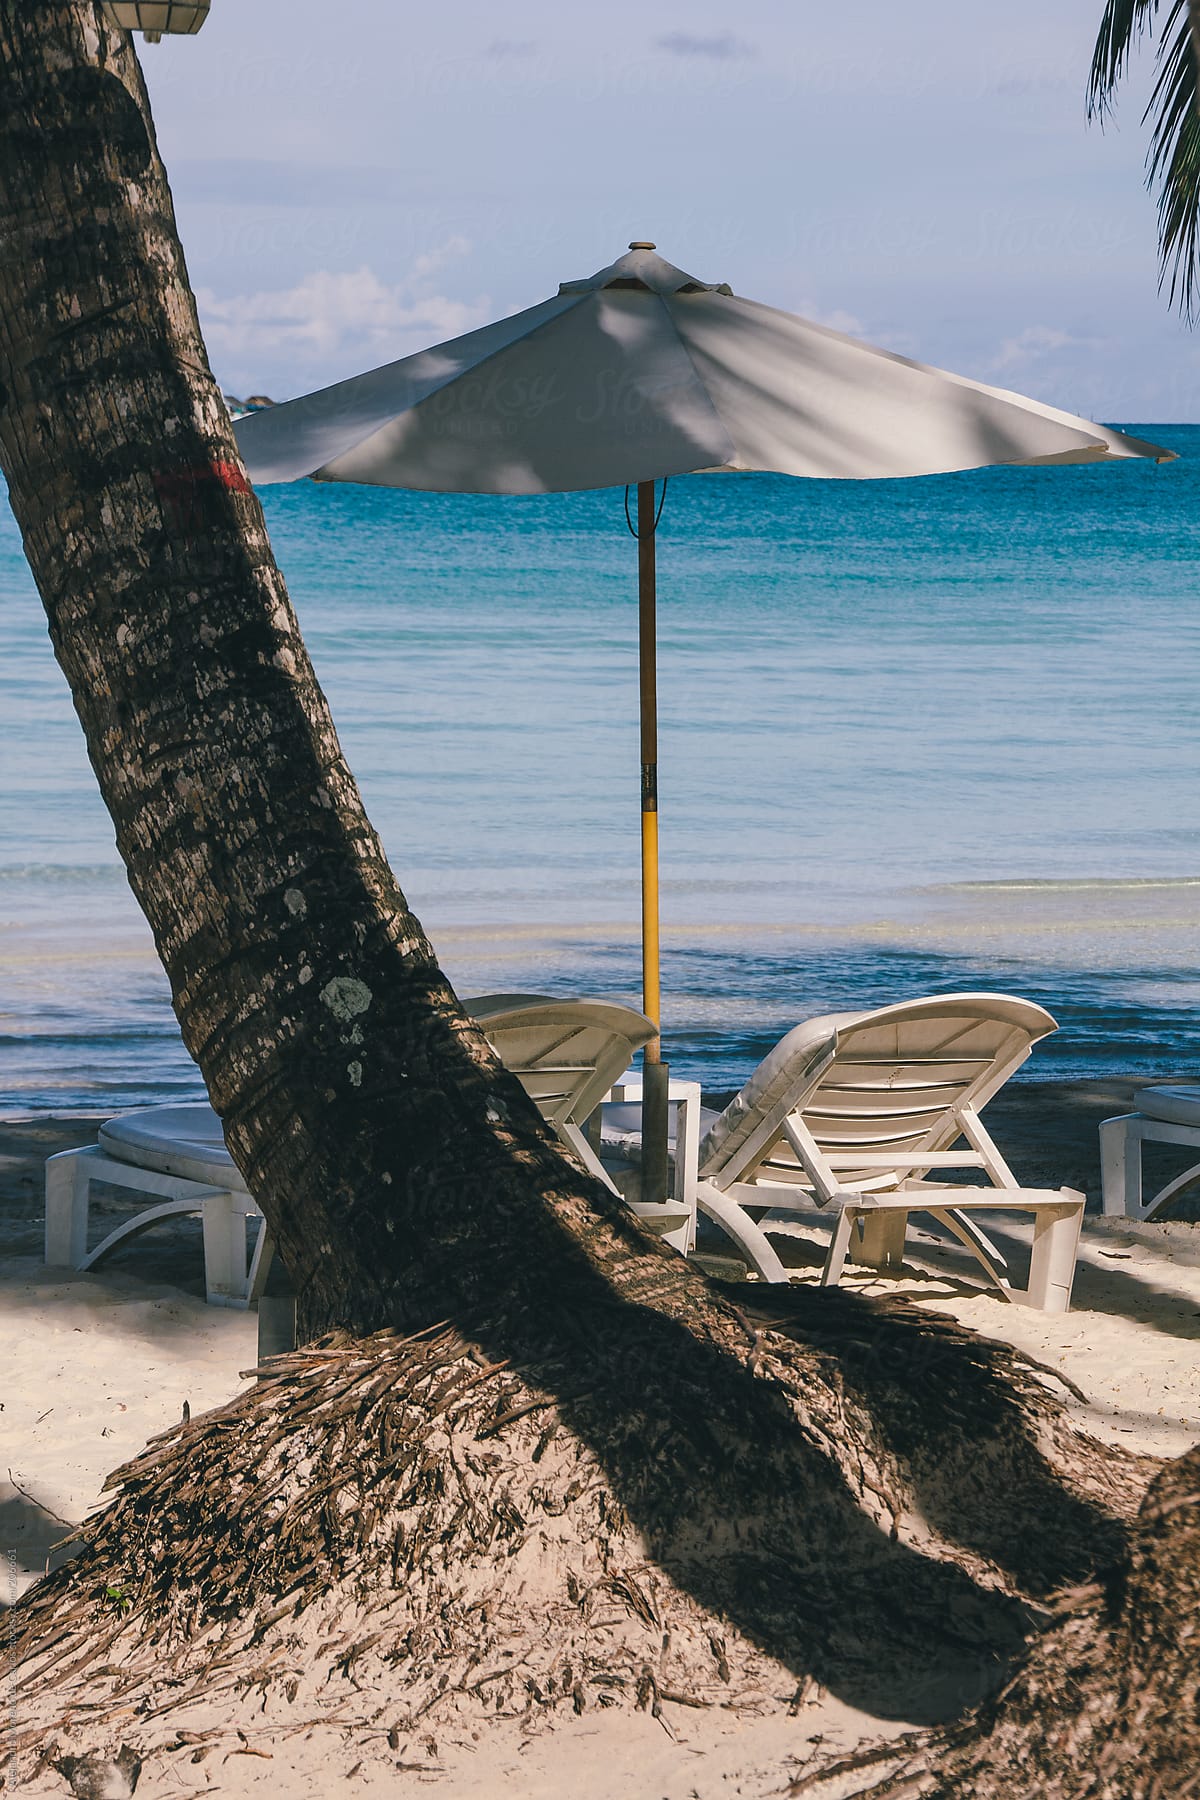 Sunshade And Hammocks On The Beach Of A Tropical Island By Stocksy Contributor Alejandro